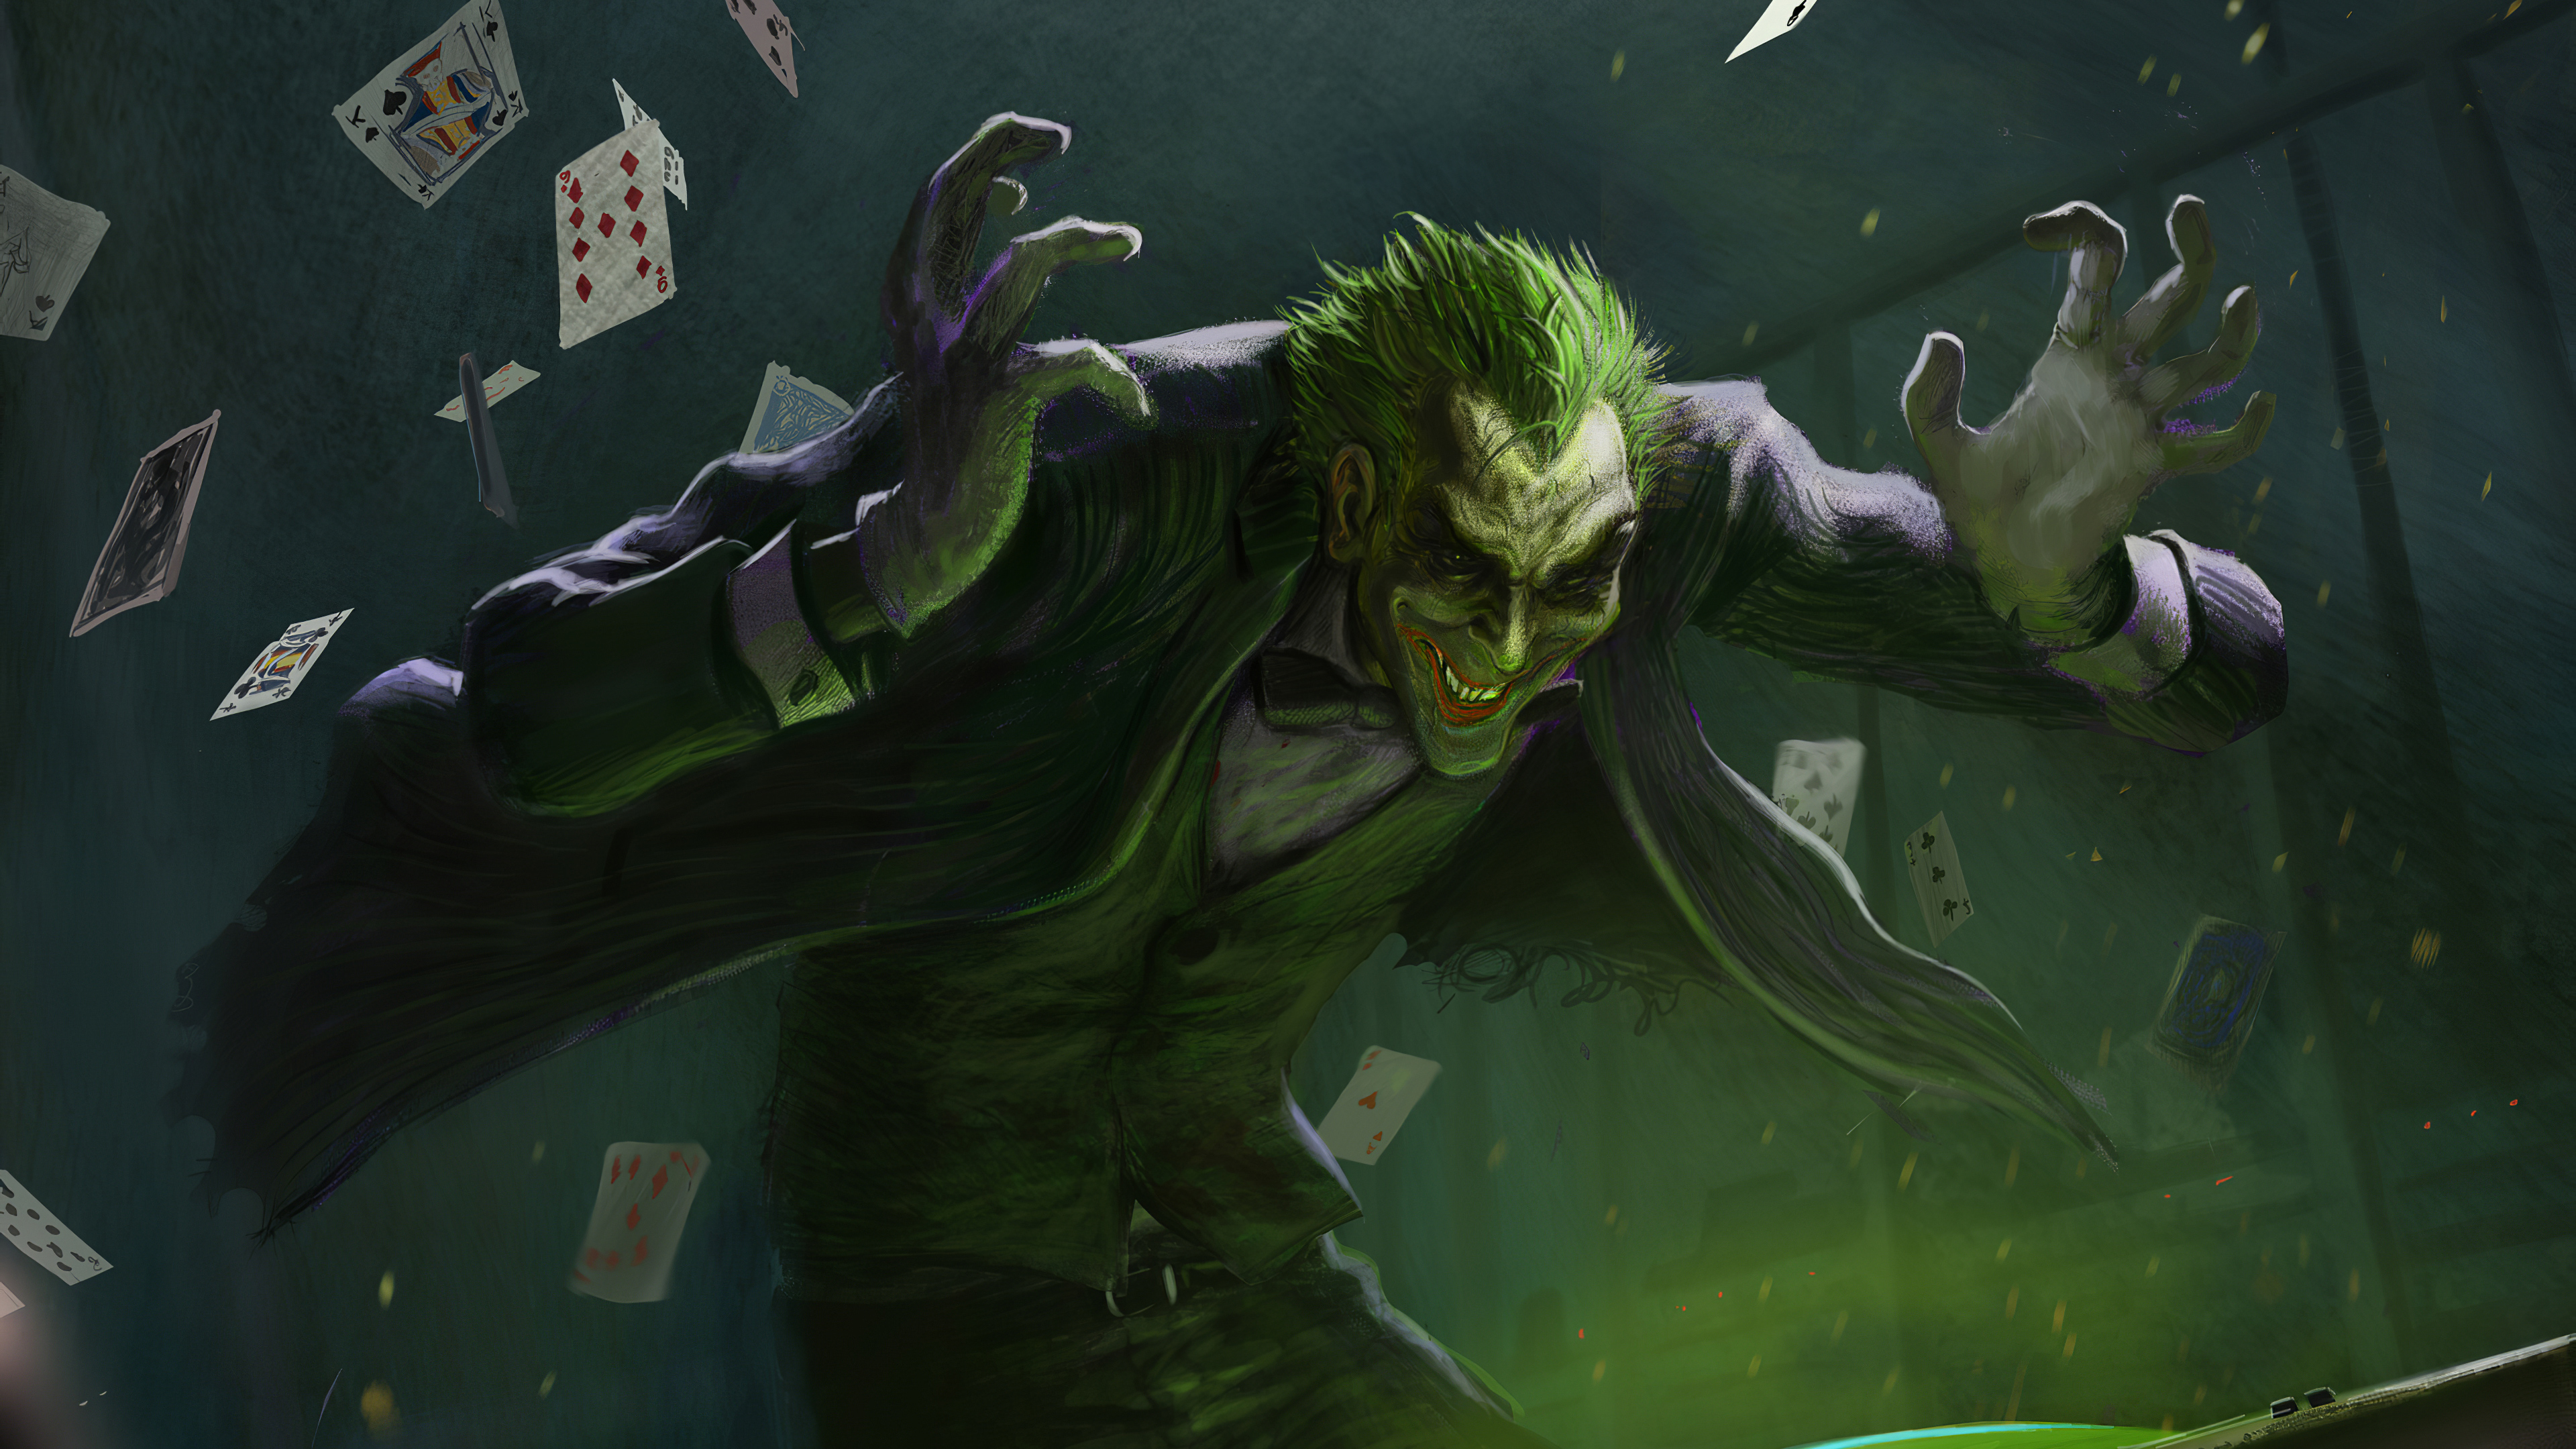 336 Joker Wallpaper Green Pictures - MyWeb